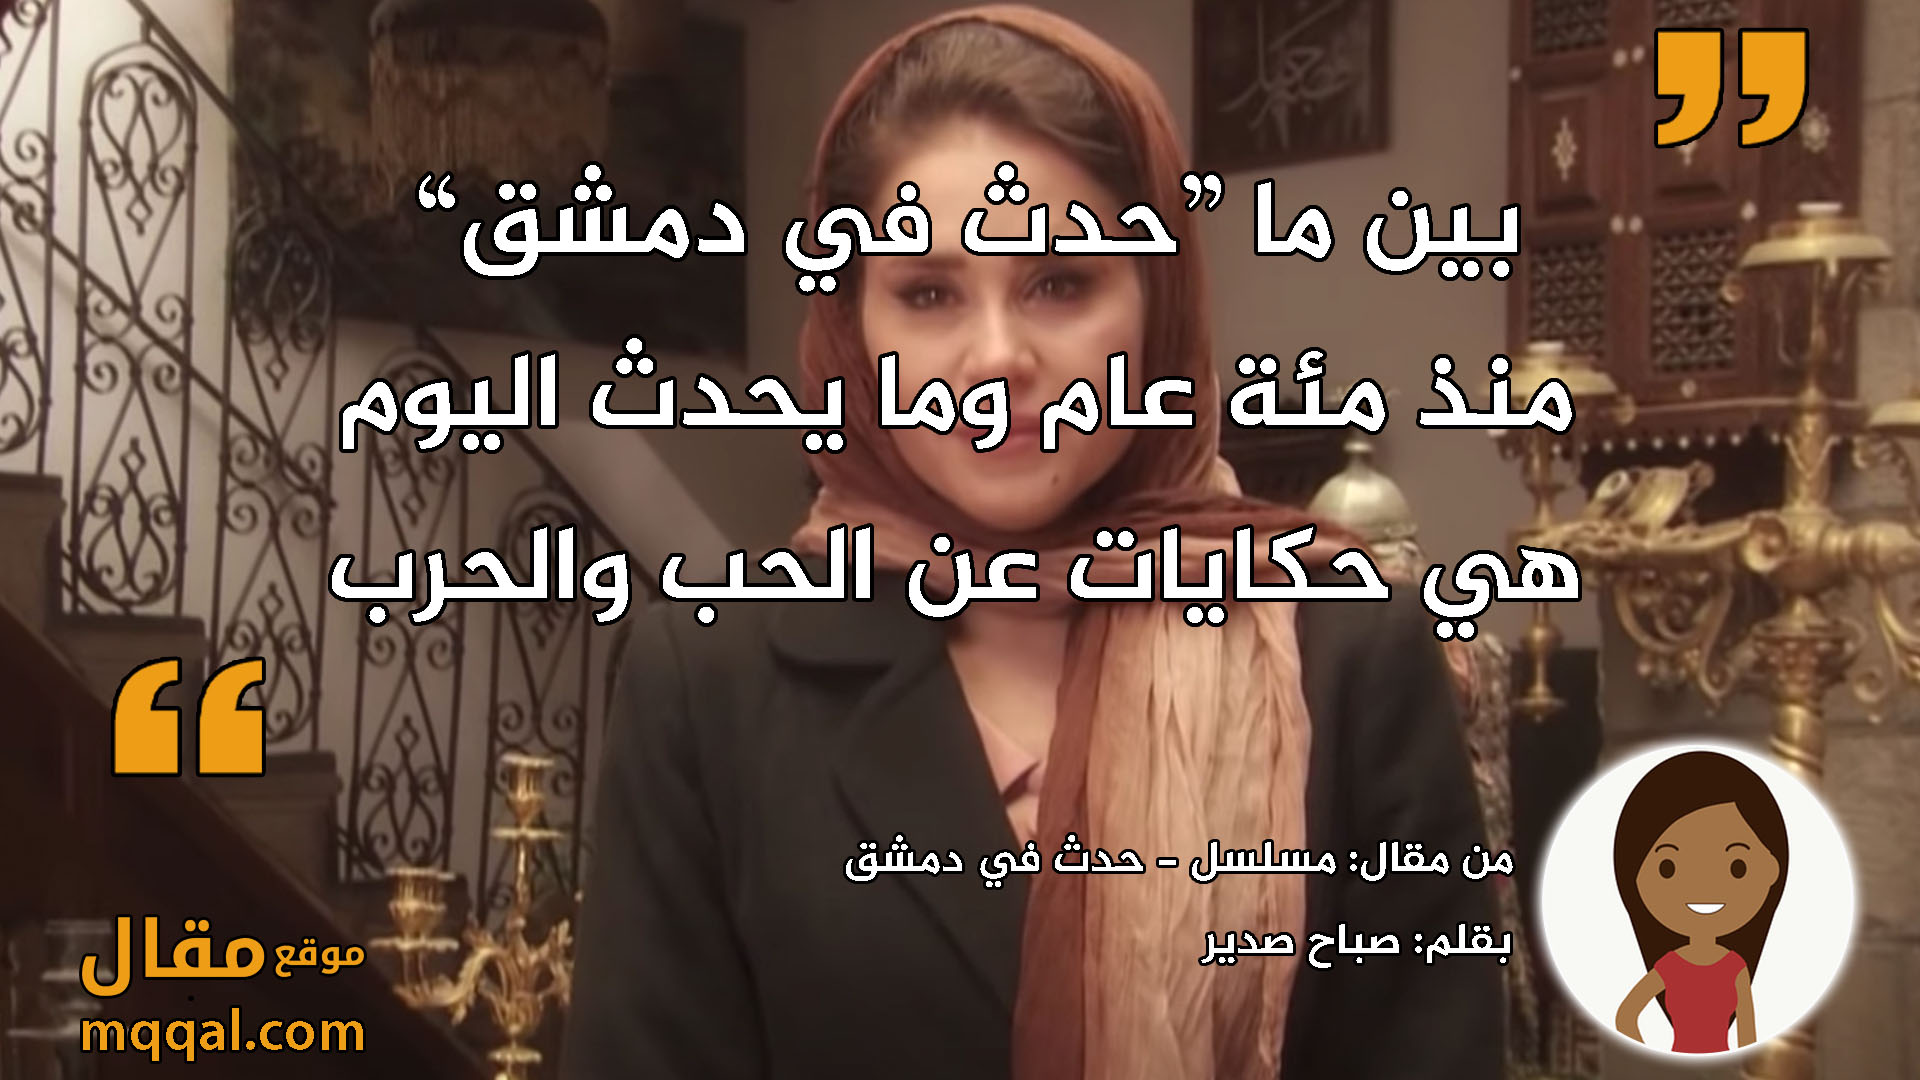 ﻣﺴﻠﺴﻞ ﺣﺪﺙ ﻓﻲ ﺩﻣﺸﻖ مسلسل درامي سوري تاريخي عن دمشق عام ١٩٤٨